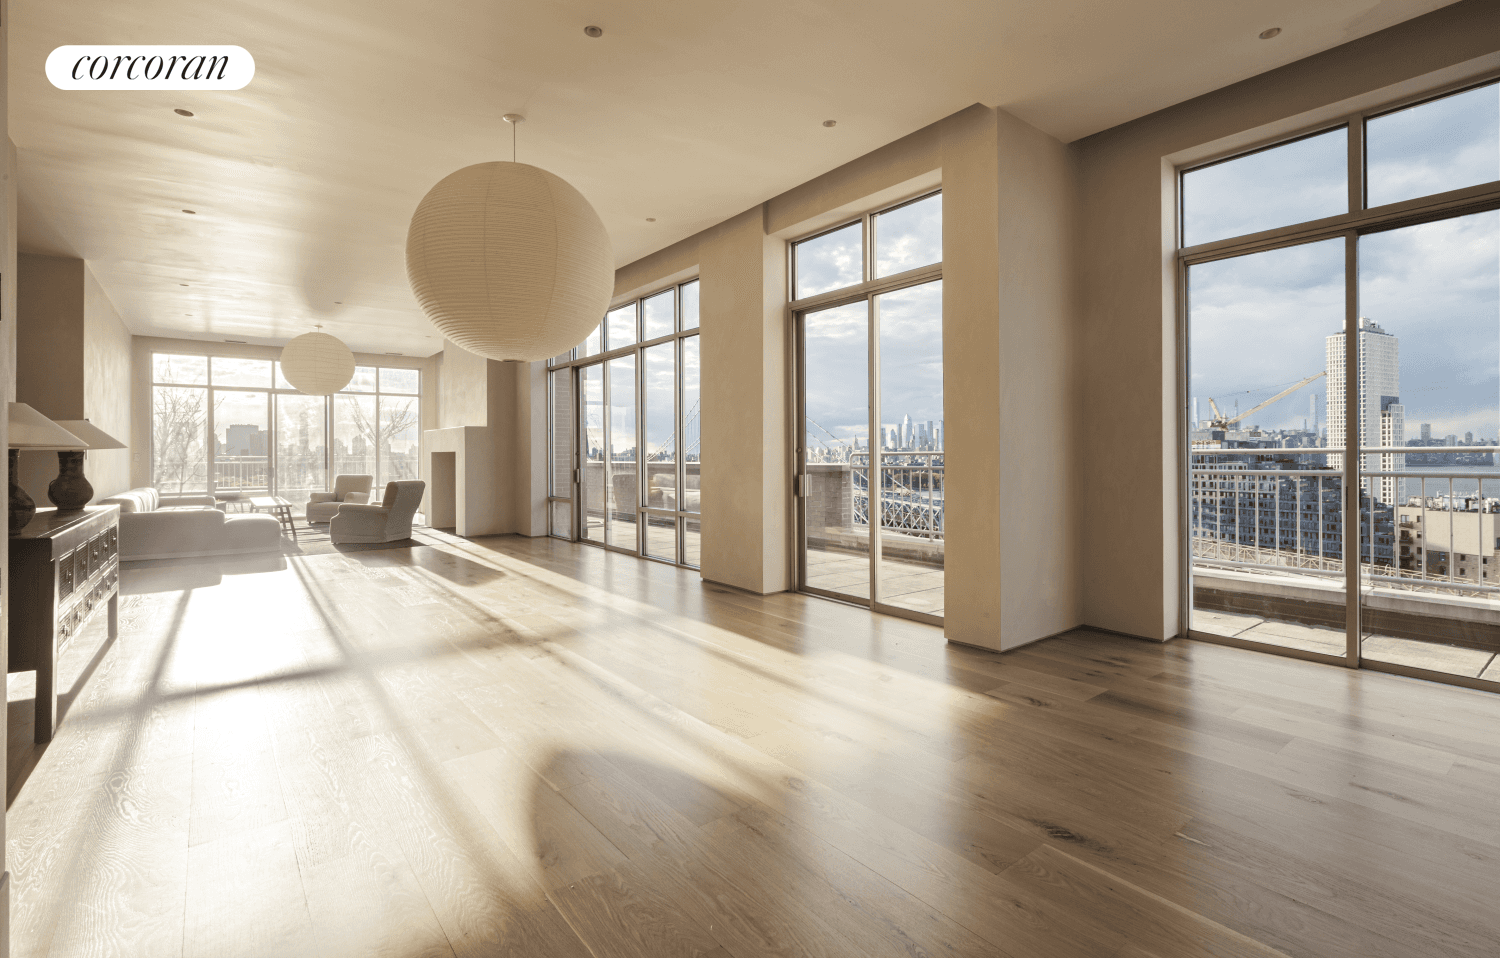 Brand new, designer renovated penthouse atop the historic Gretsch Condominium in Williamsburg !